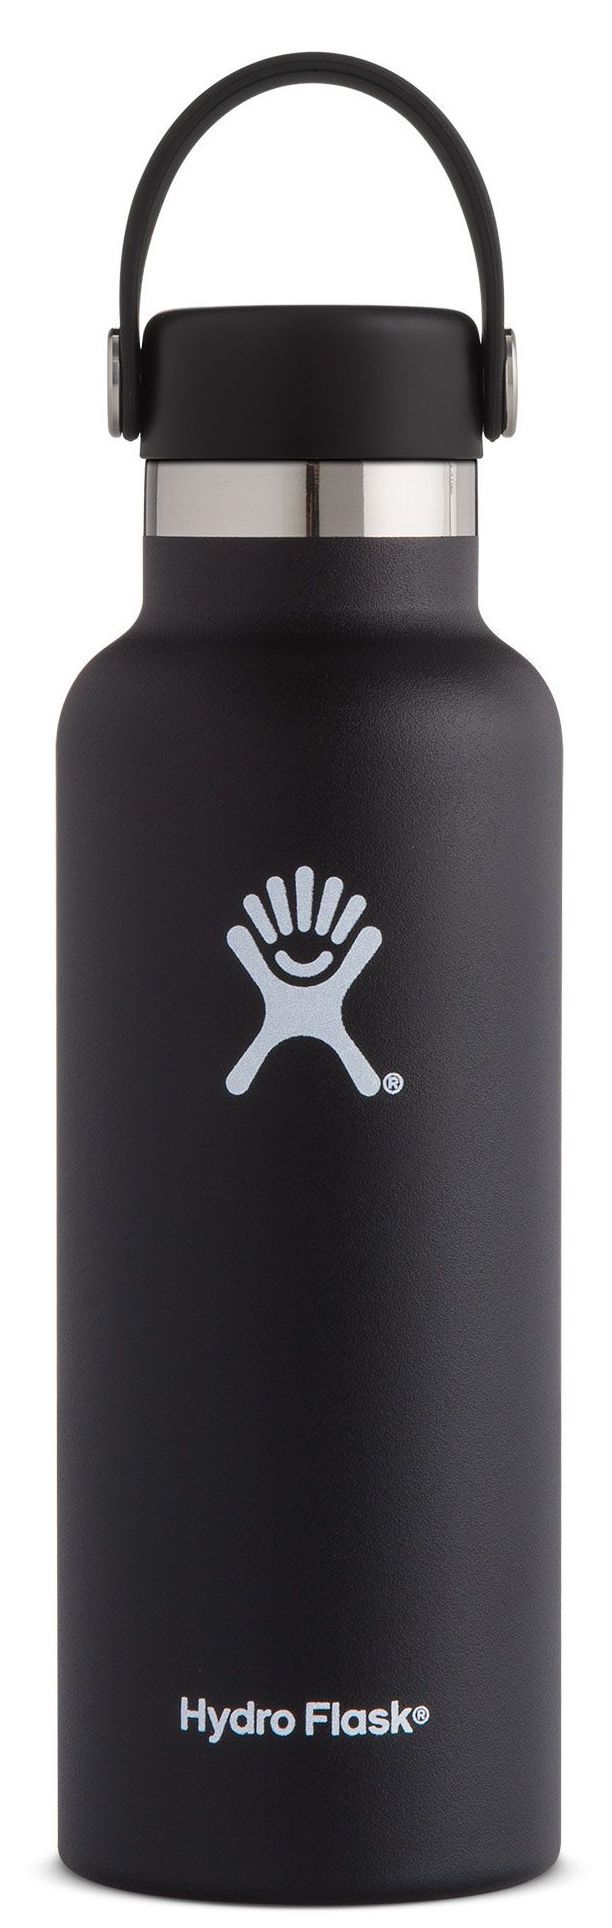 Hydro Flask 18 oz Standard Mouth - Vacuum flask